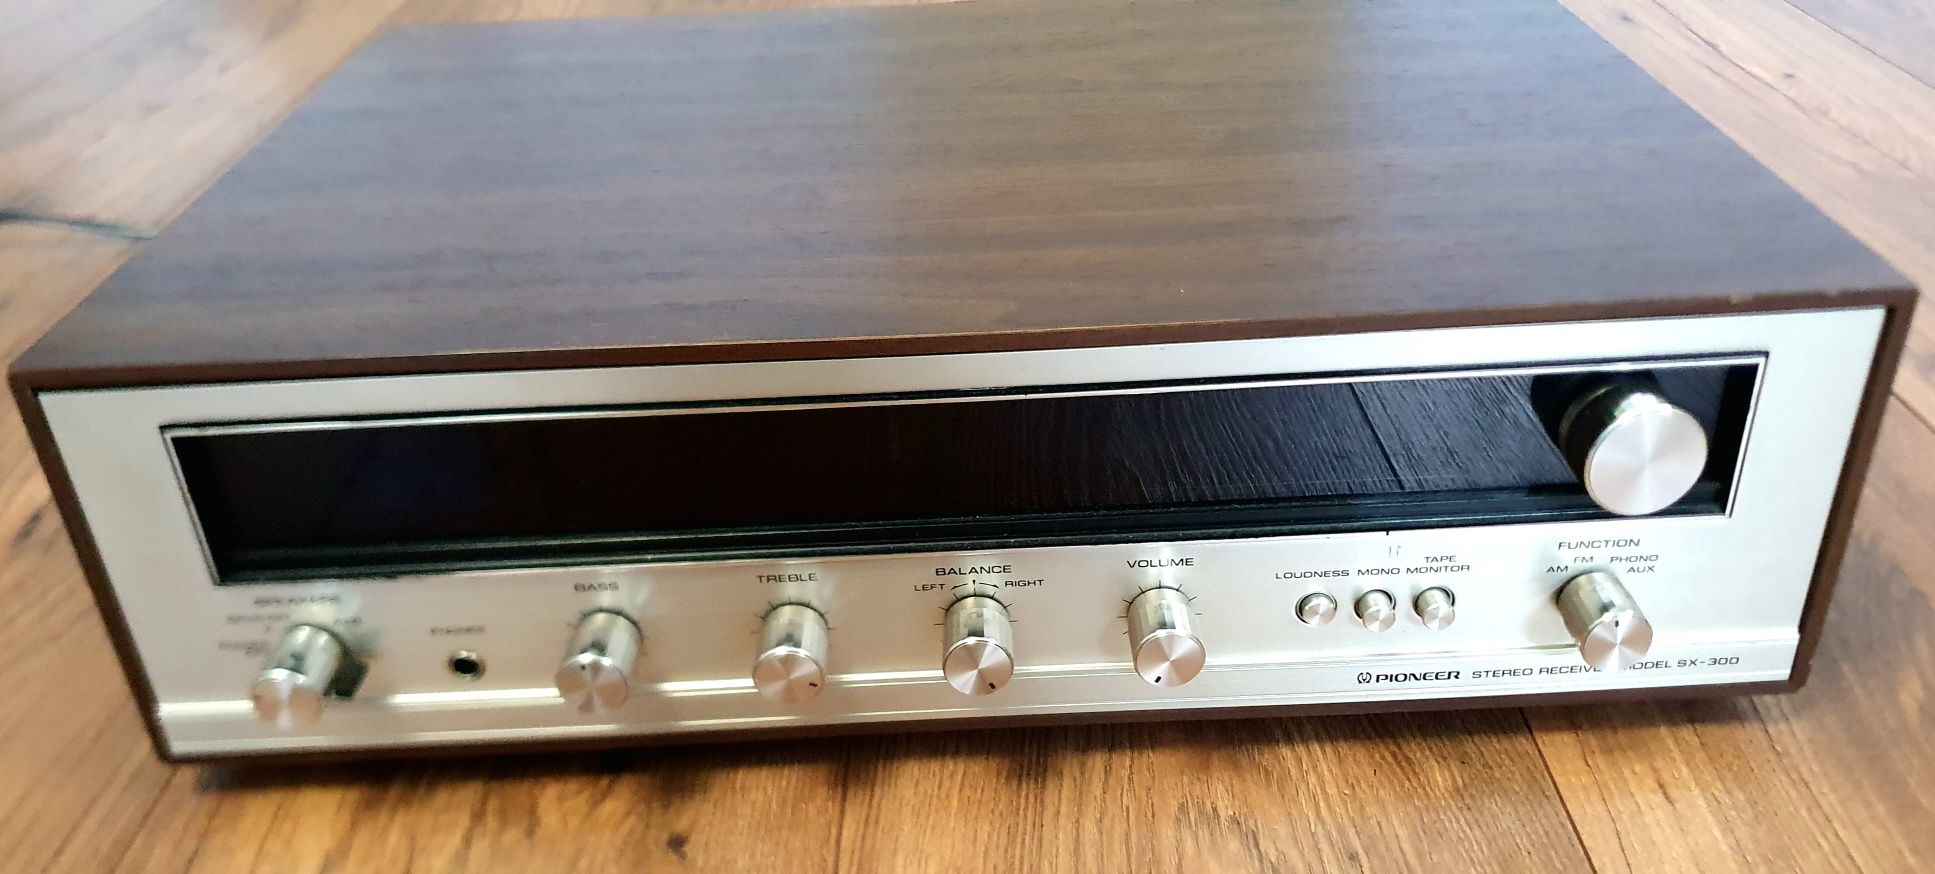 Pioneer SX-300 Amplituner Vintage